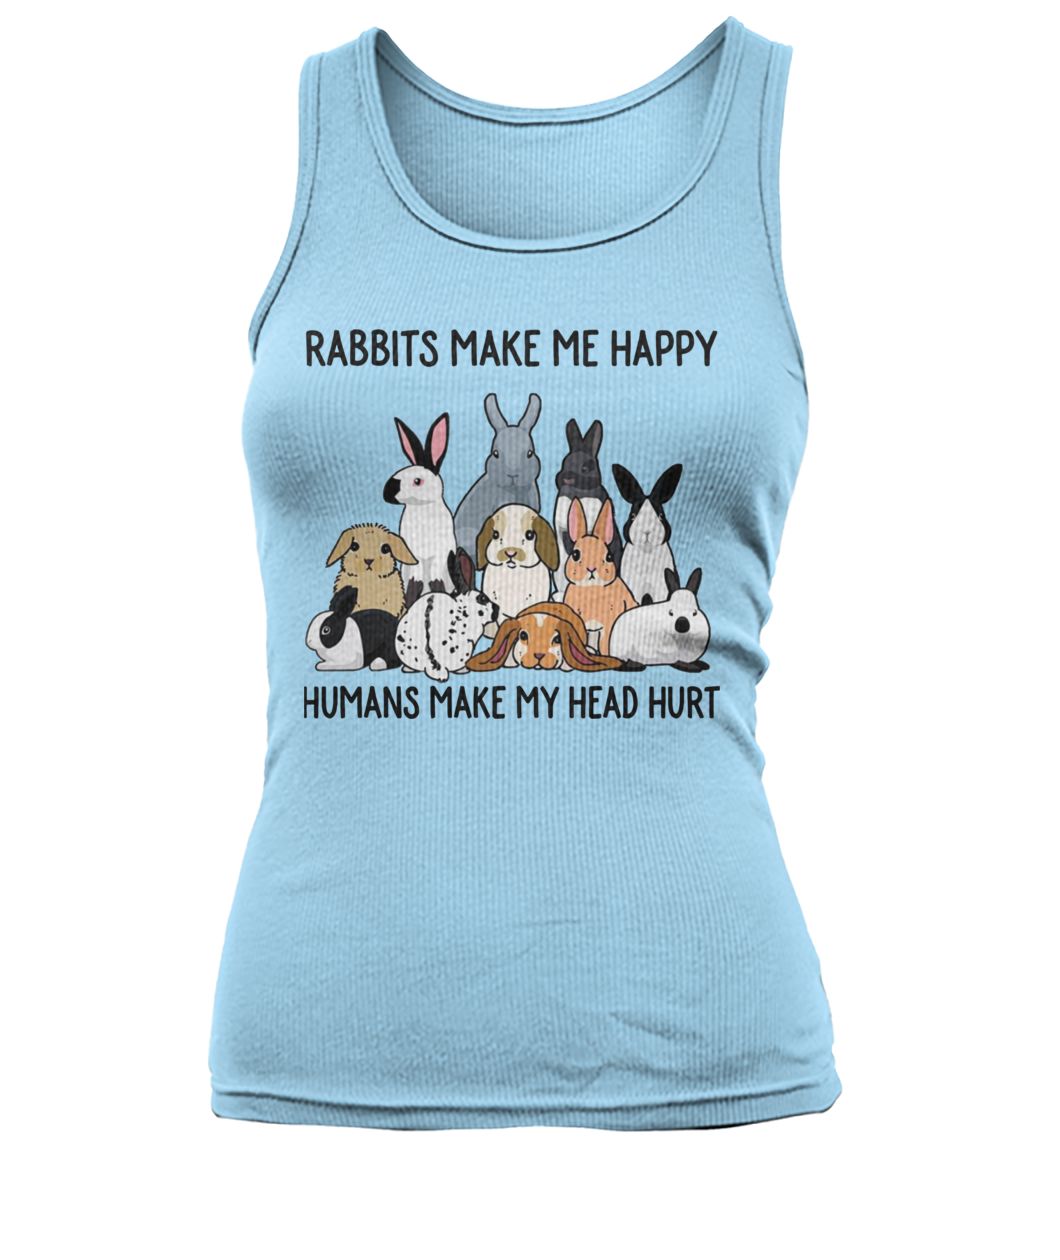 Rabbits make me happy humans make head hurt women's tank top